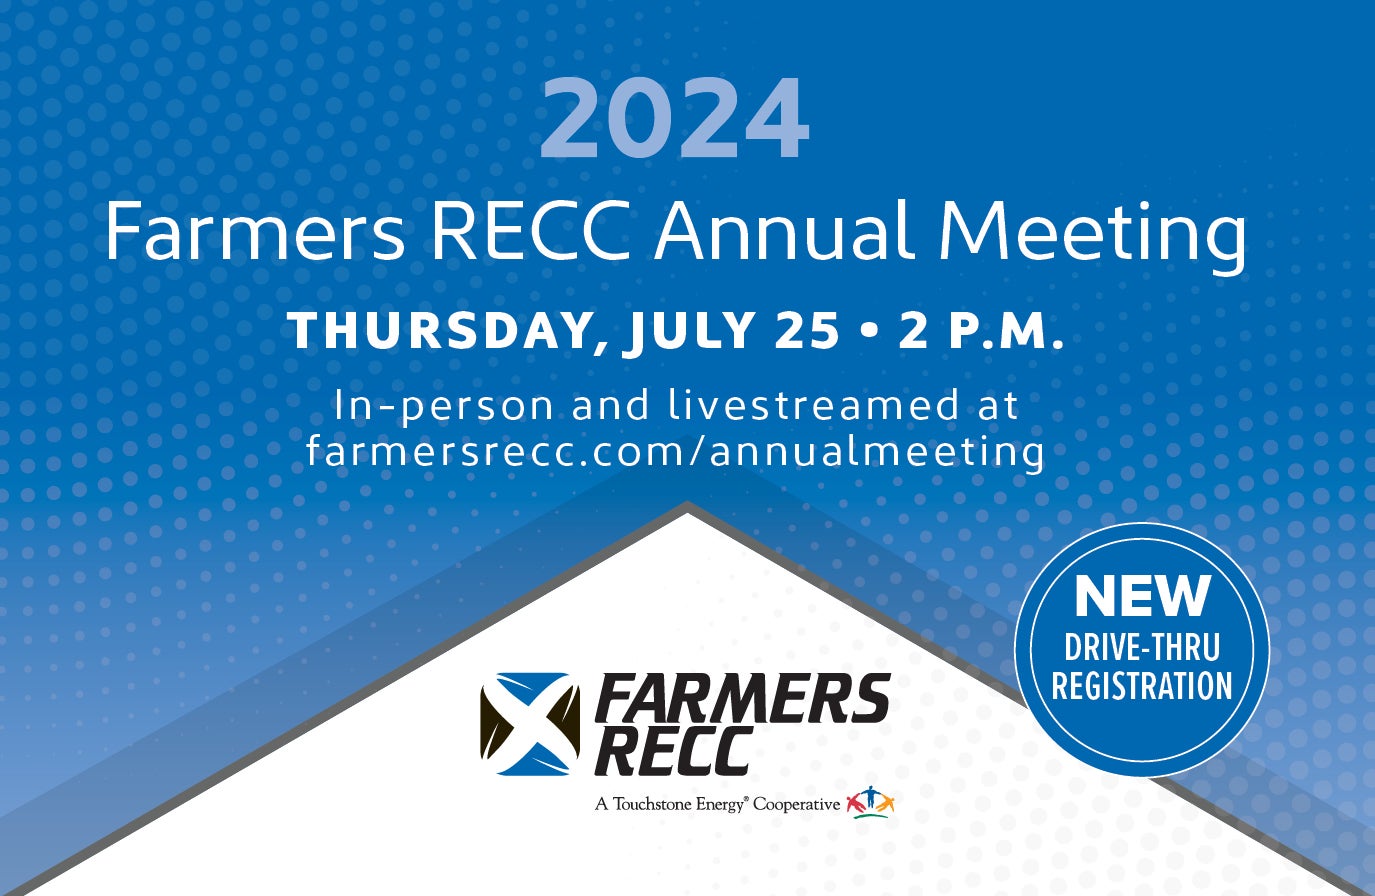 Farmers RECC Annual Meeting Information